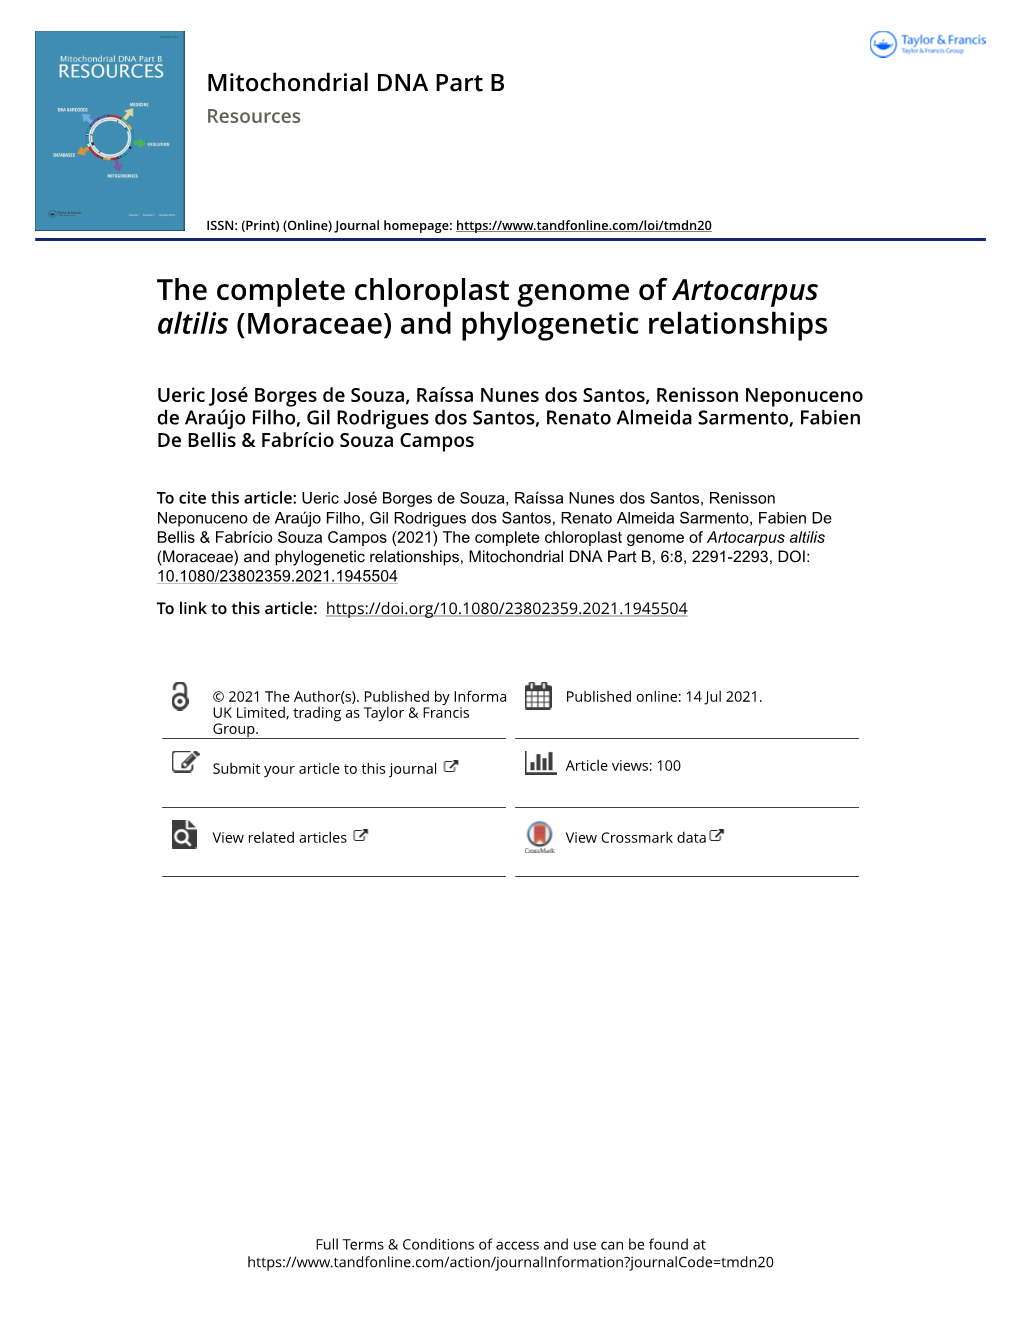 The Complete Chloroplast Genome of Artocarpus Altilis (Moraceae) and Phylogenetic Relationships